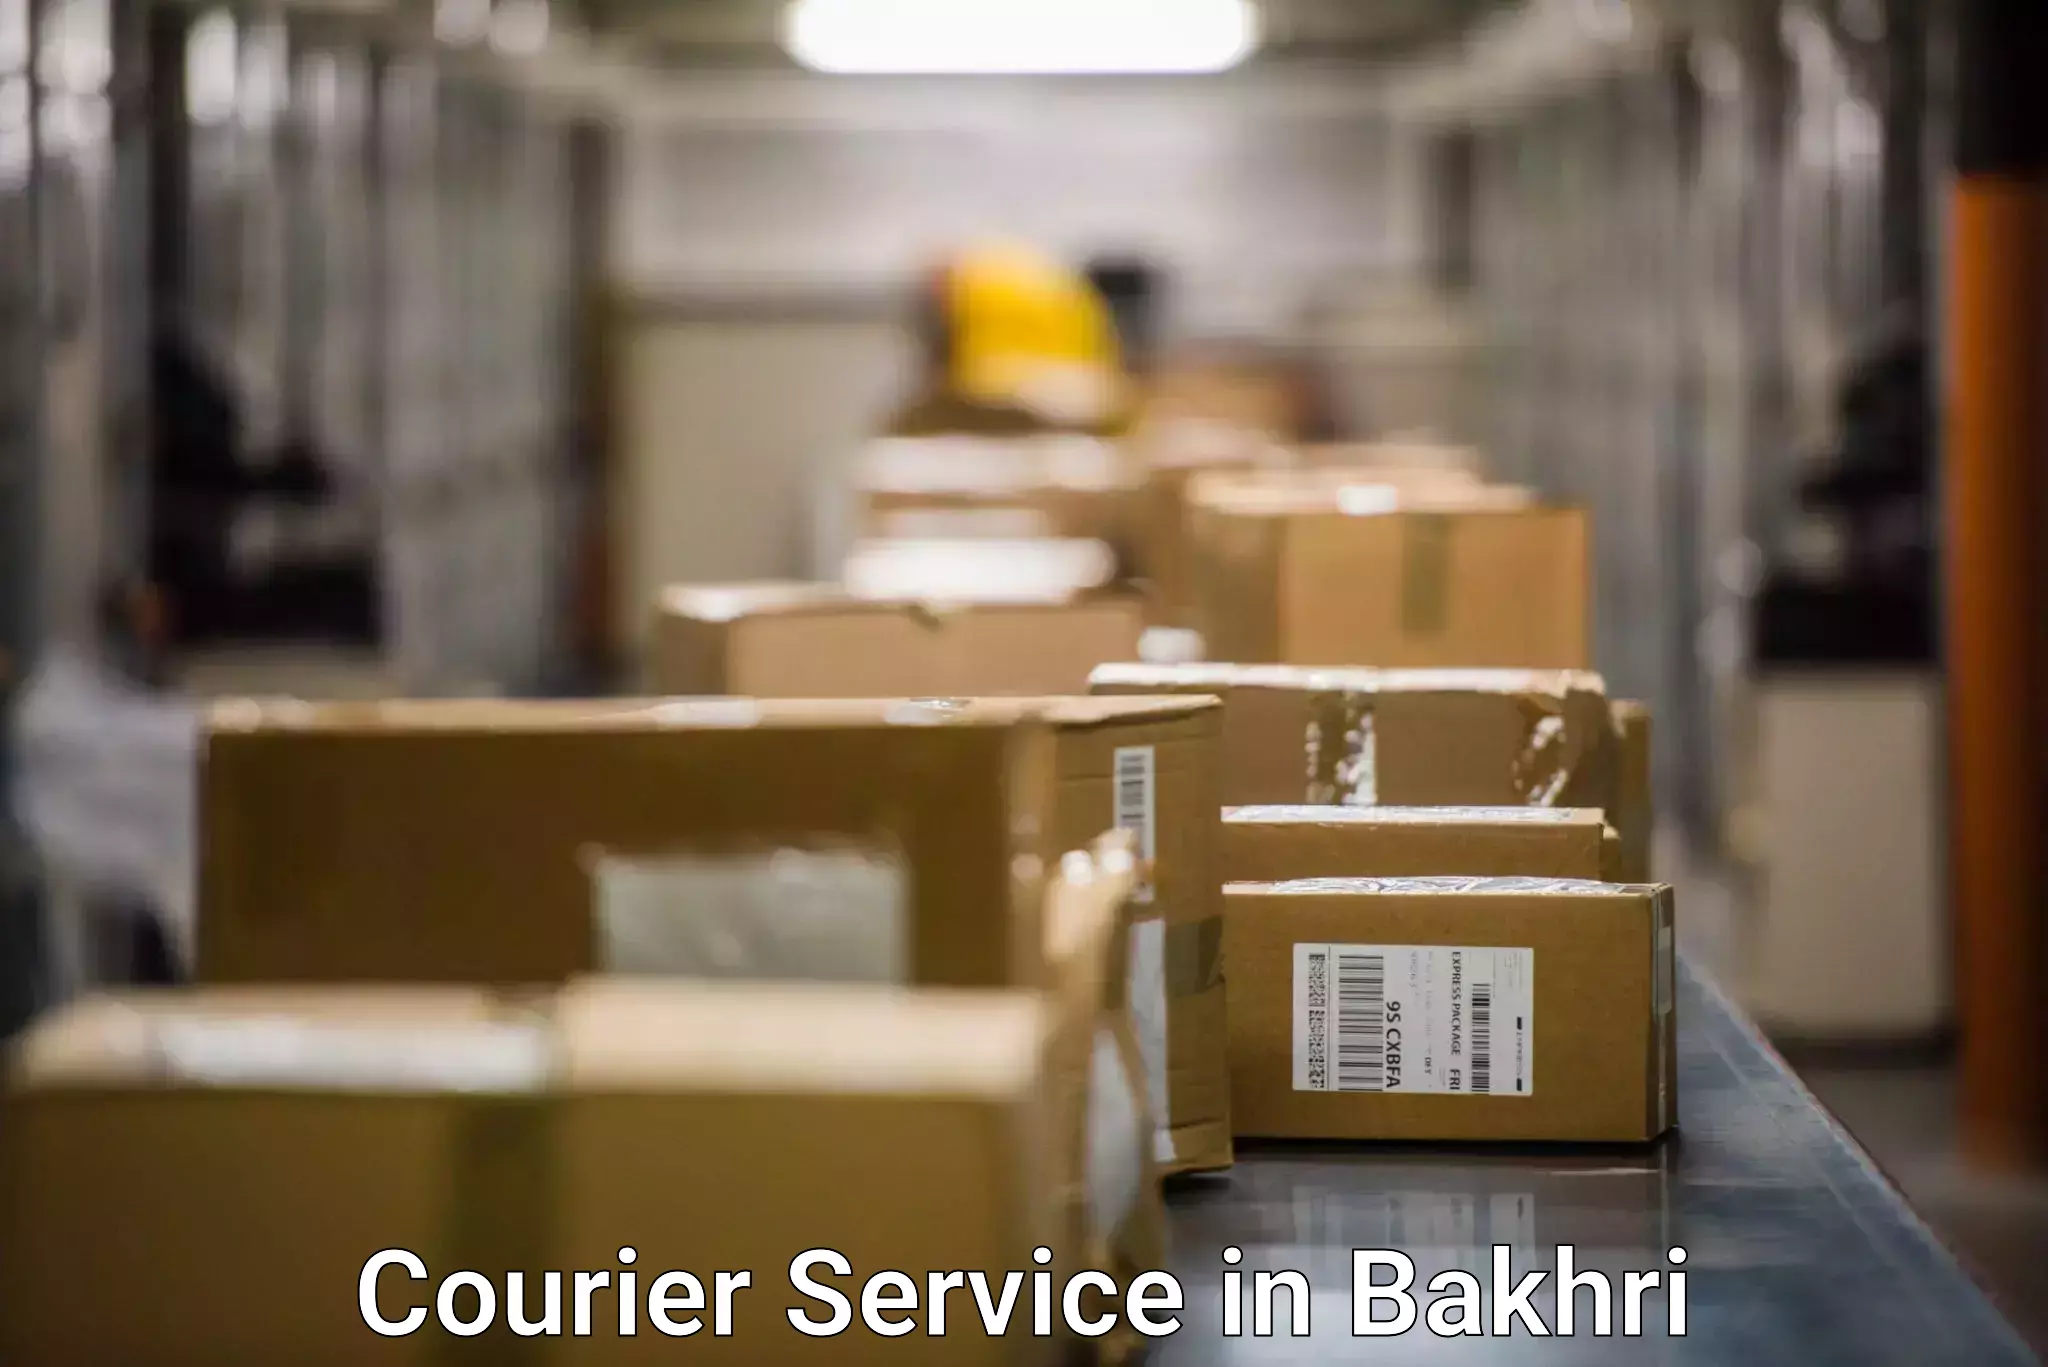 Budget-friendly shipping in Bakhri